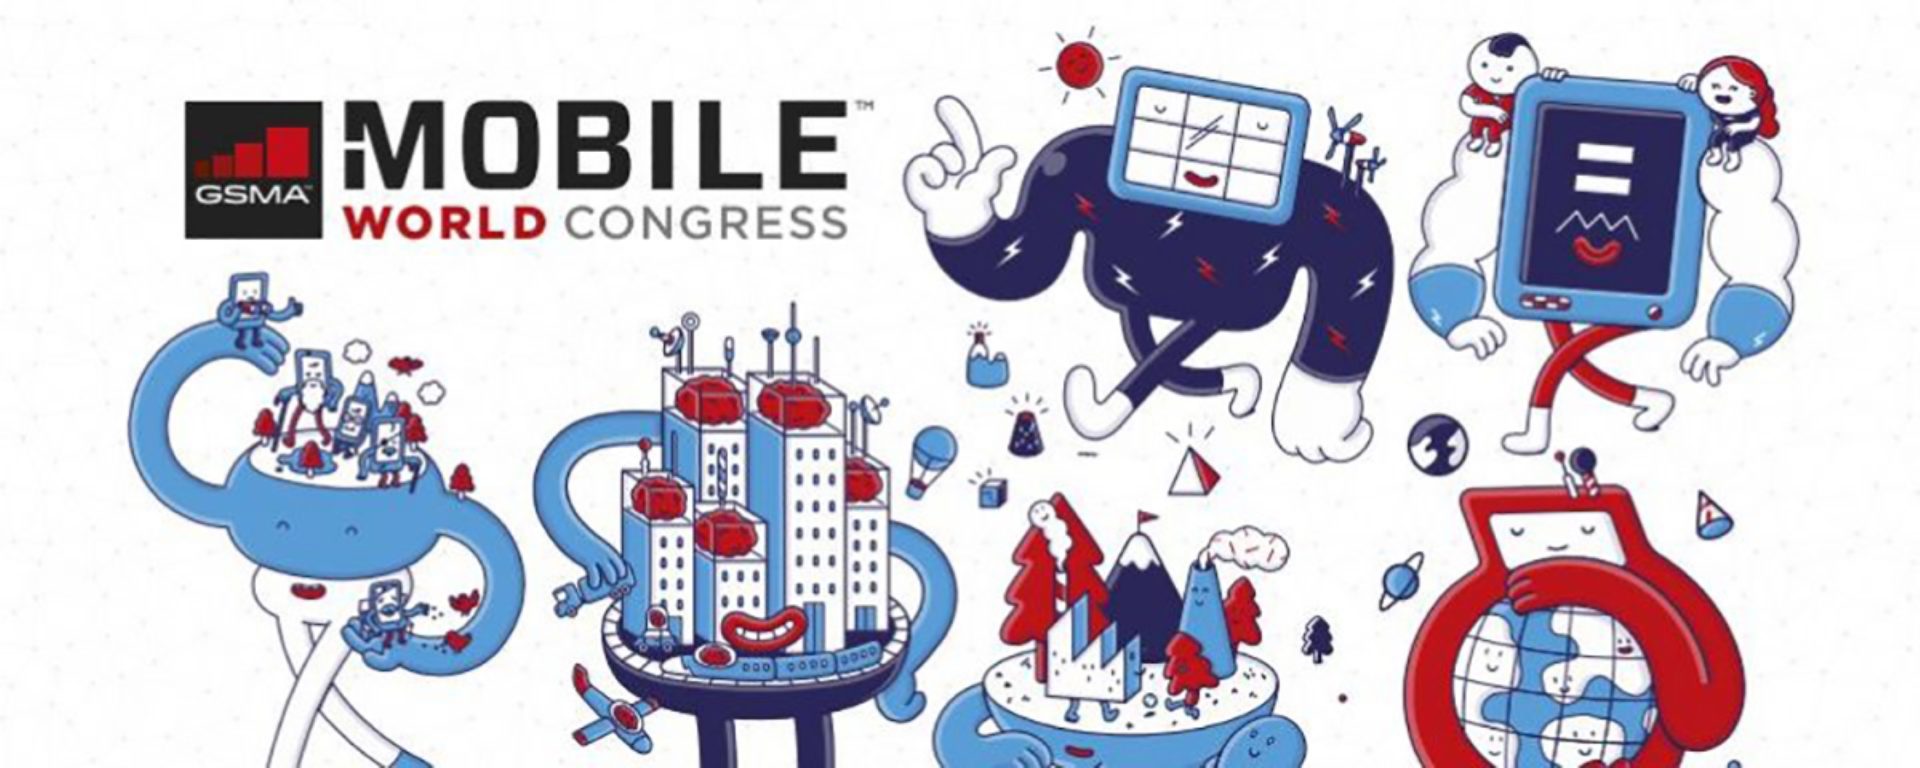 Cartel del Mobile World Congress de Barcelona